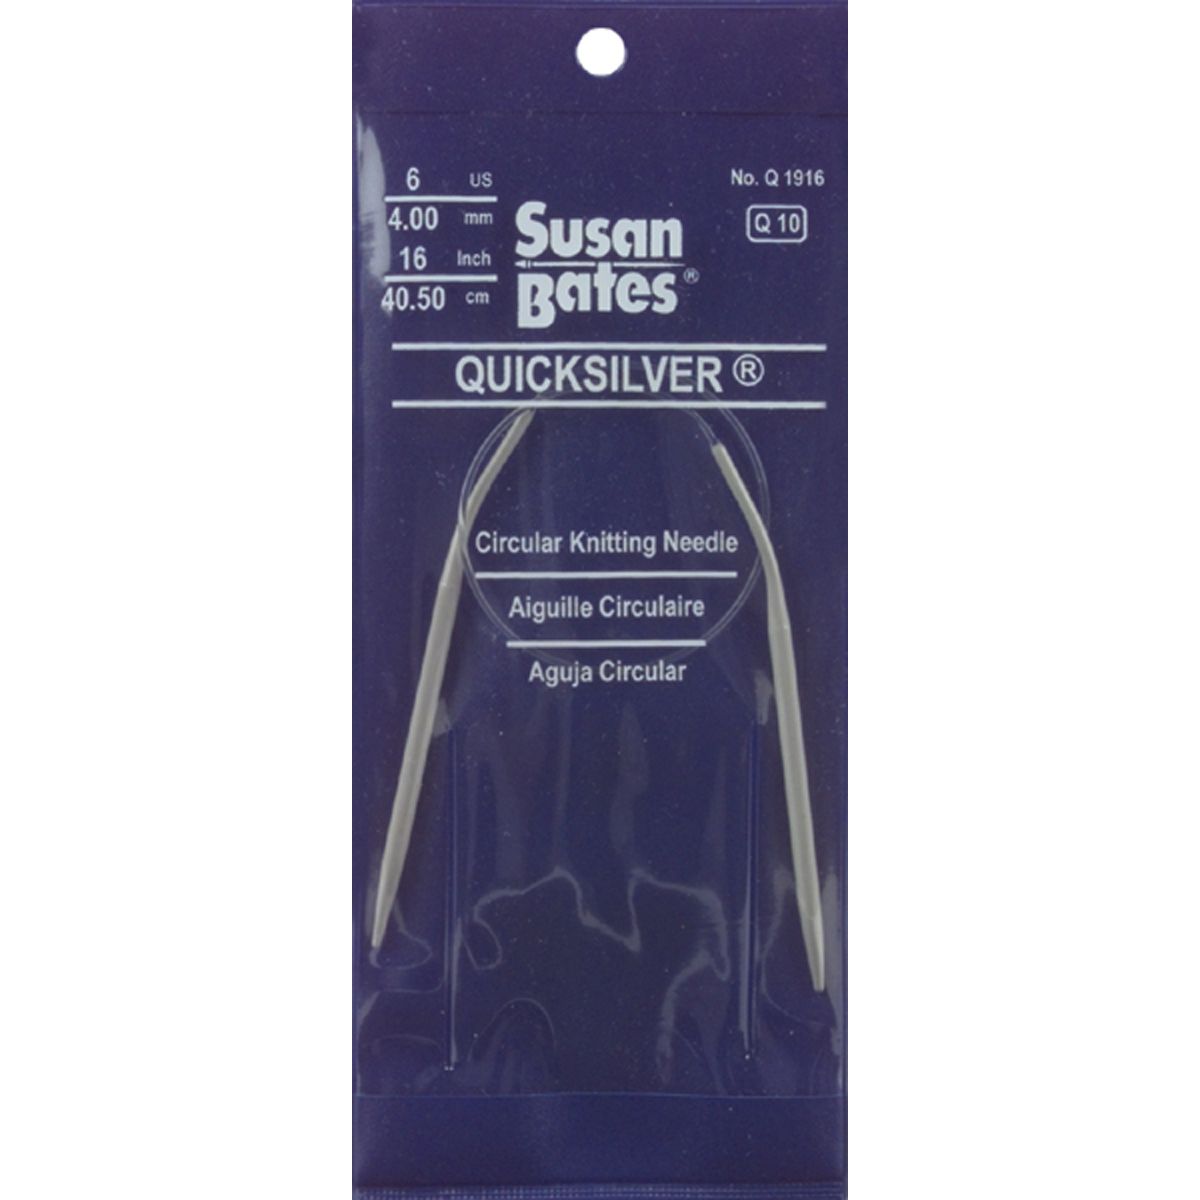 Susan Bates Quicksilver Circular Knitting Needle 24" Size 17